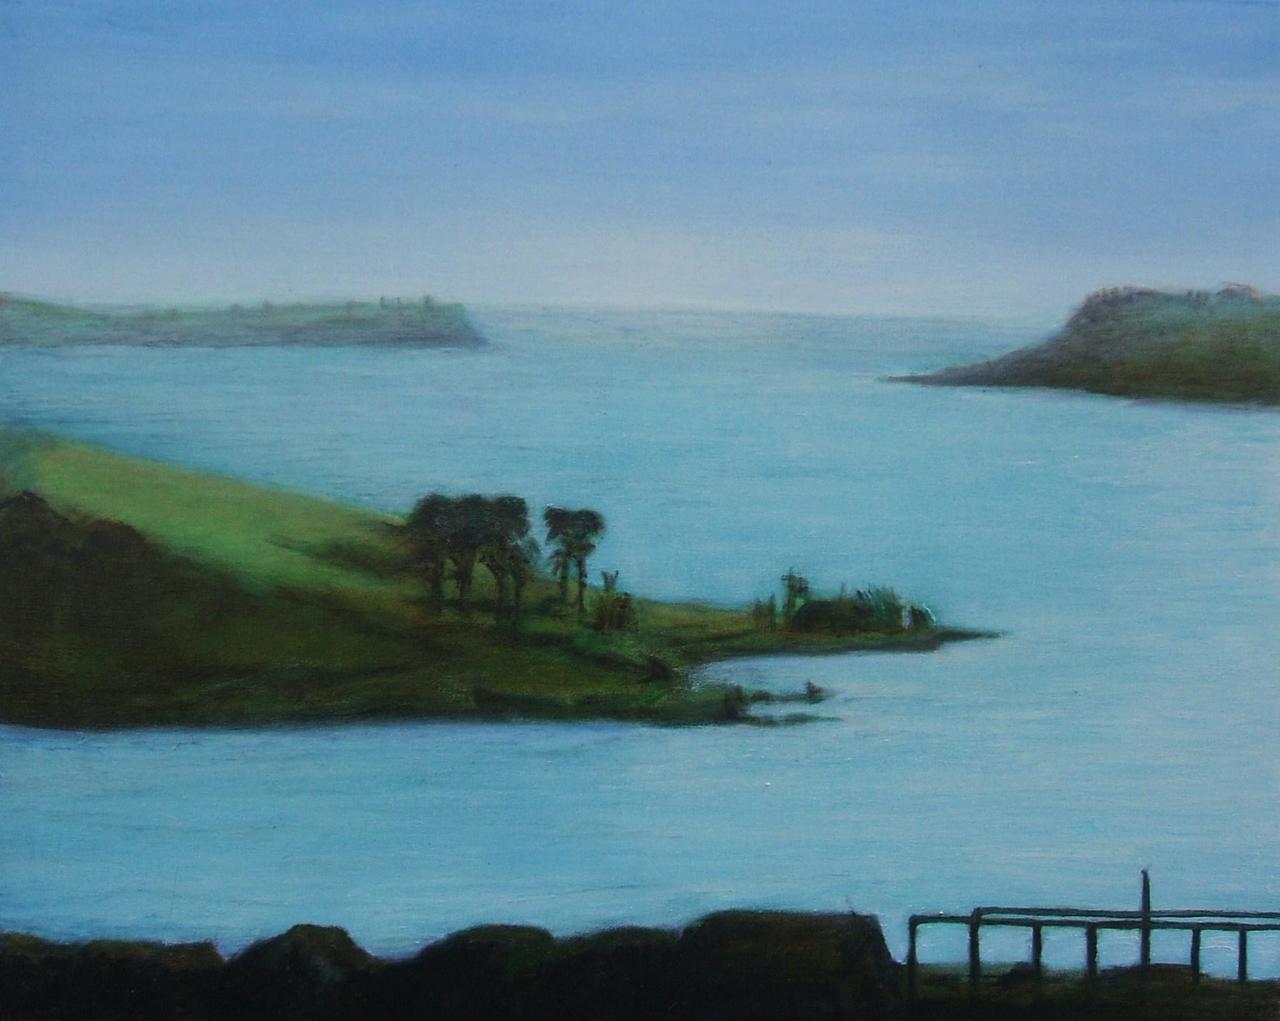 'Cork Harbour' Oil on canvas. #art #oil #painting #landscape #cobh #ireland #fineart http://t.co/MUPgM3z4PF